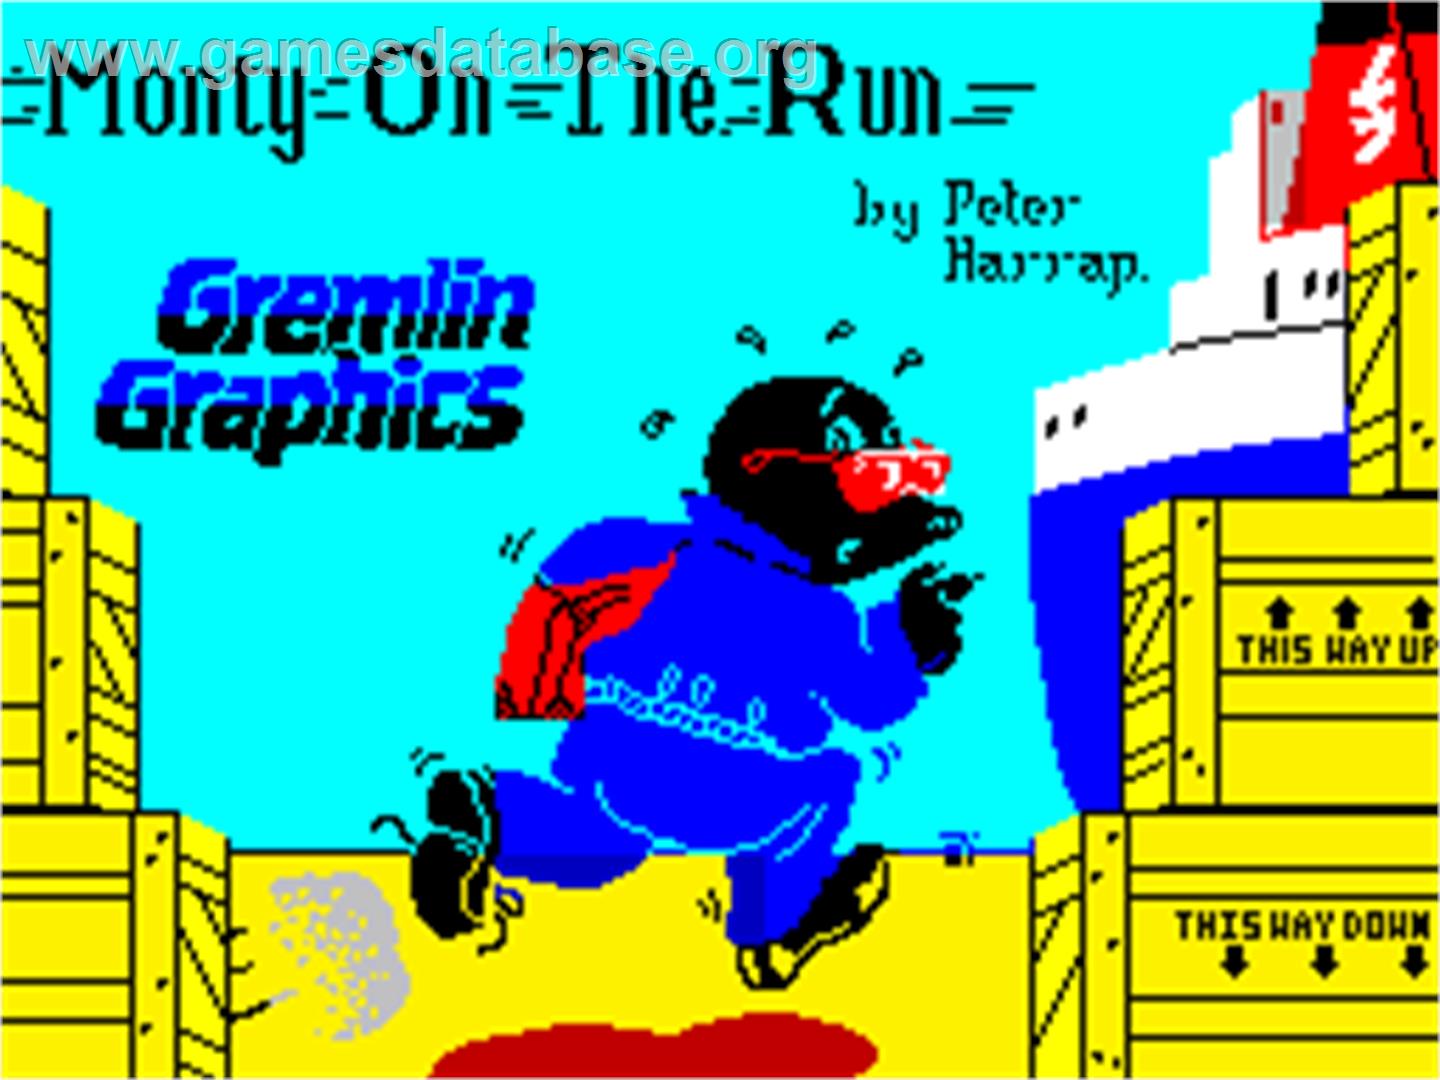 Monty on the Run - Sinclair ZX Spectrum - Artwork - Title Screen